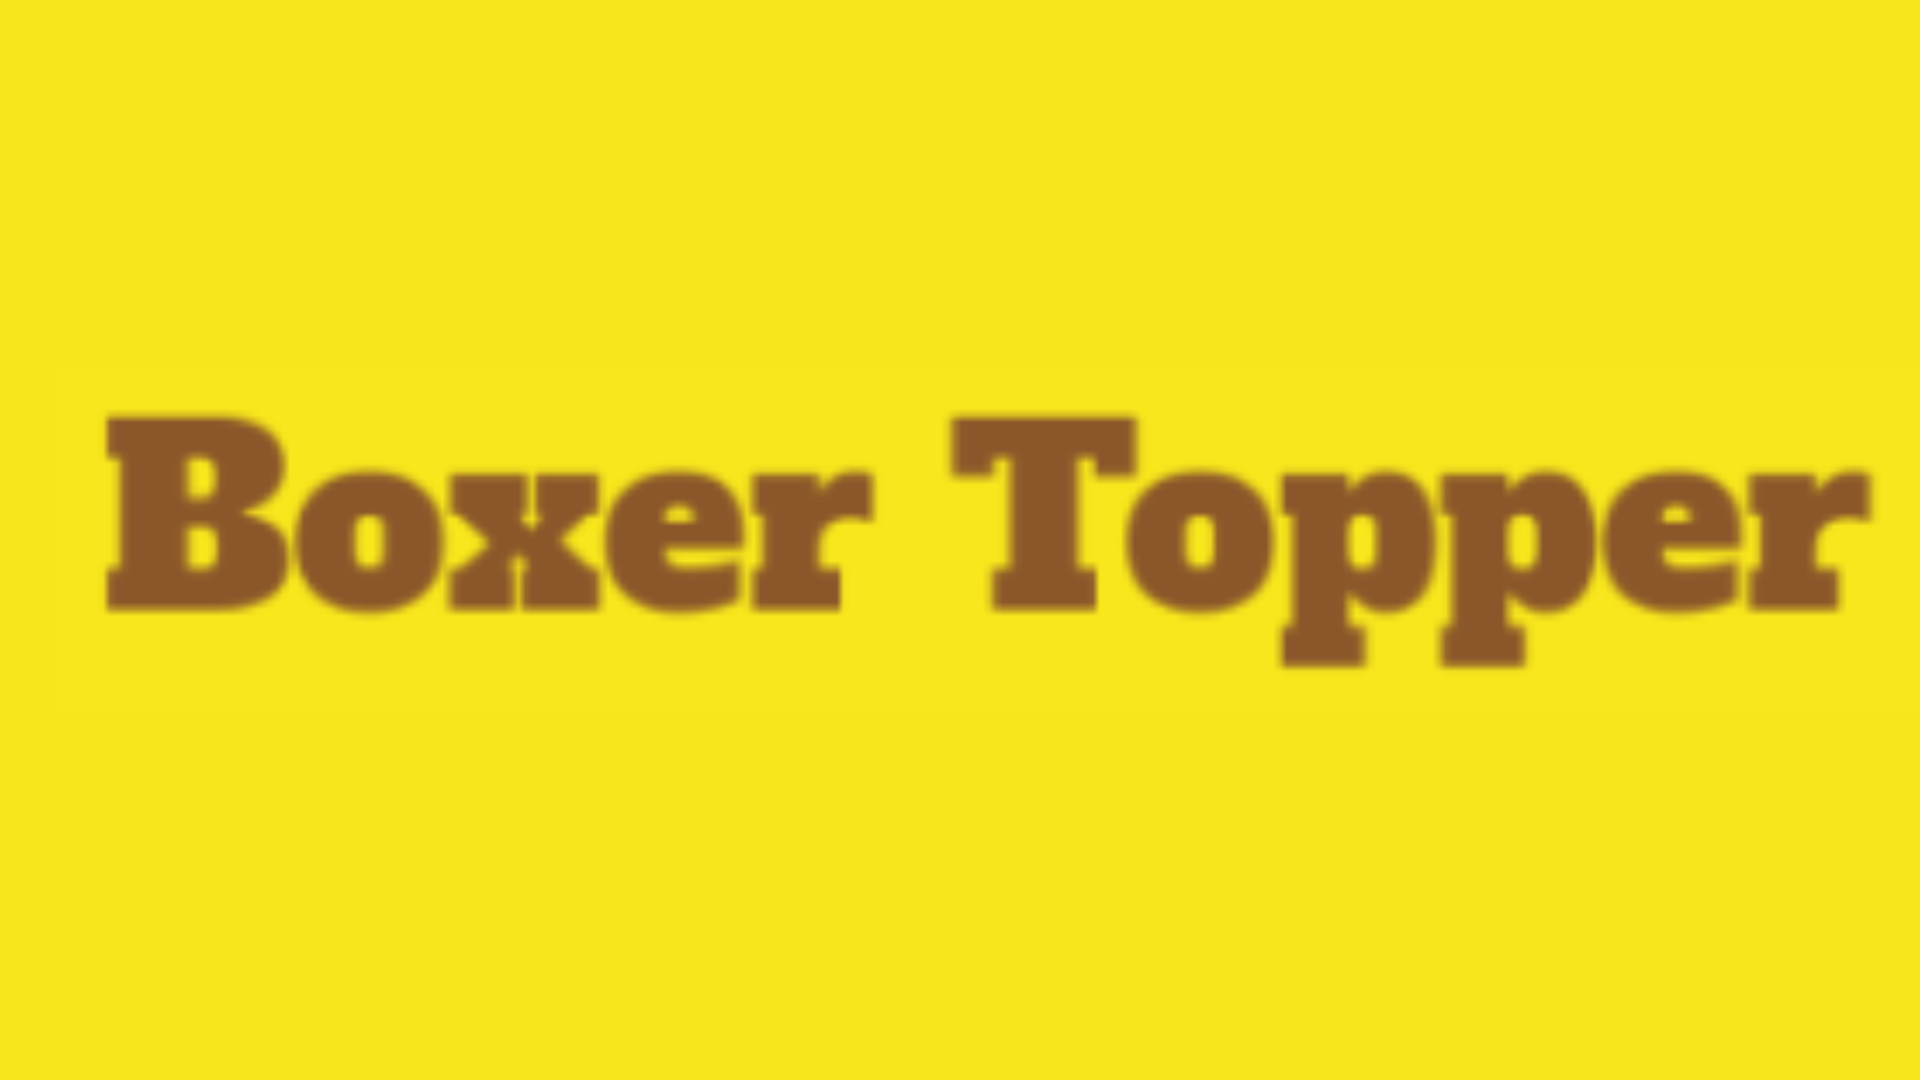 Boxer Topper